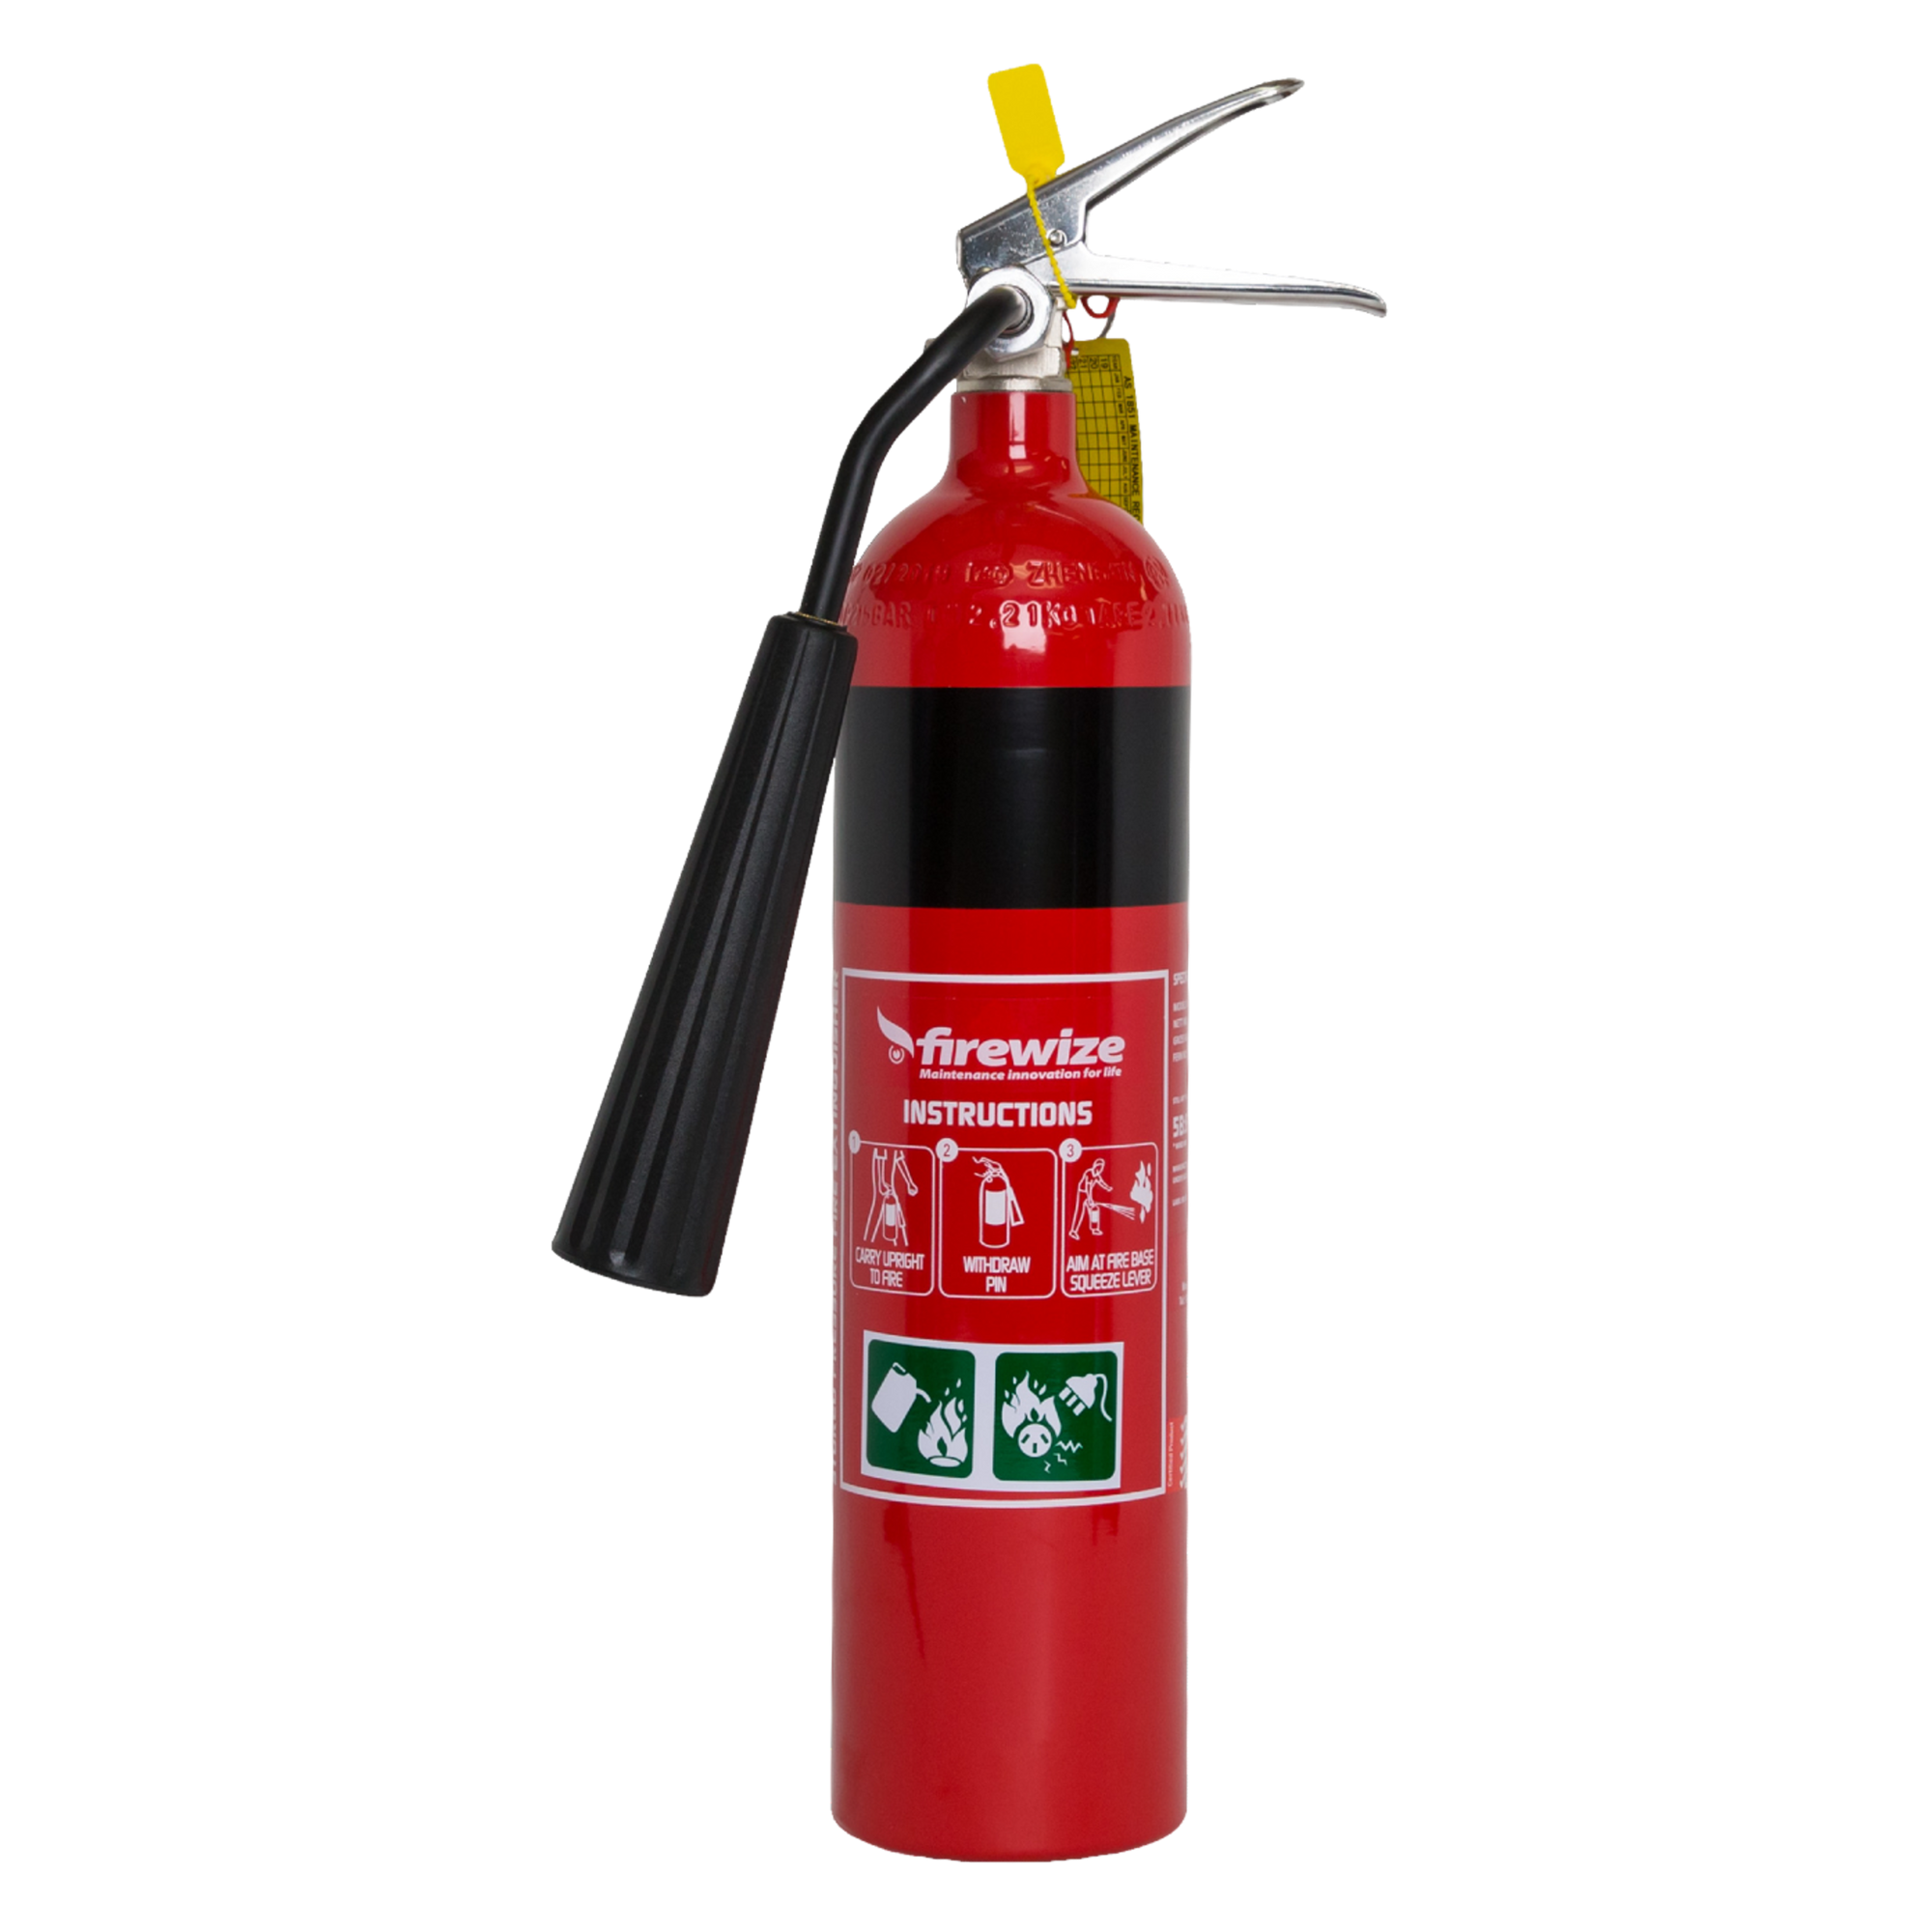 Carbon Dioxide CO2 2.0kg fire extinguisher